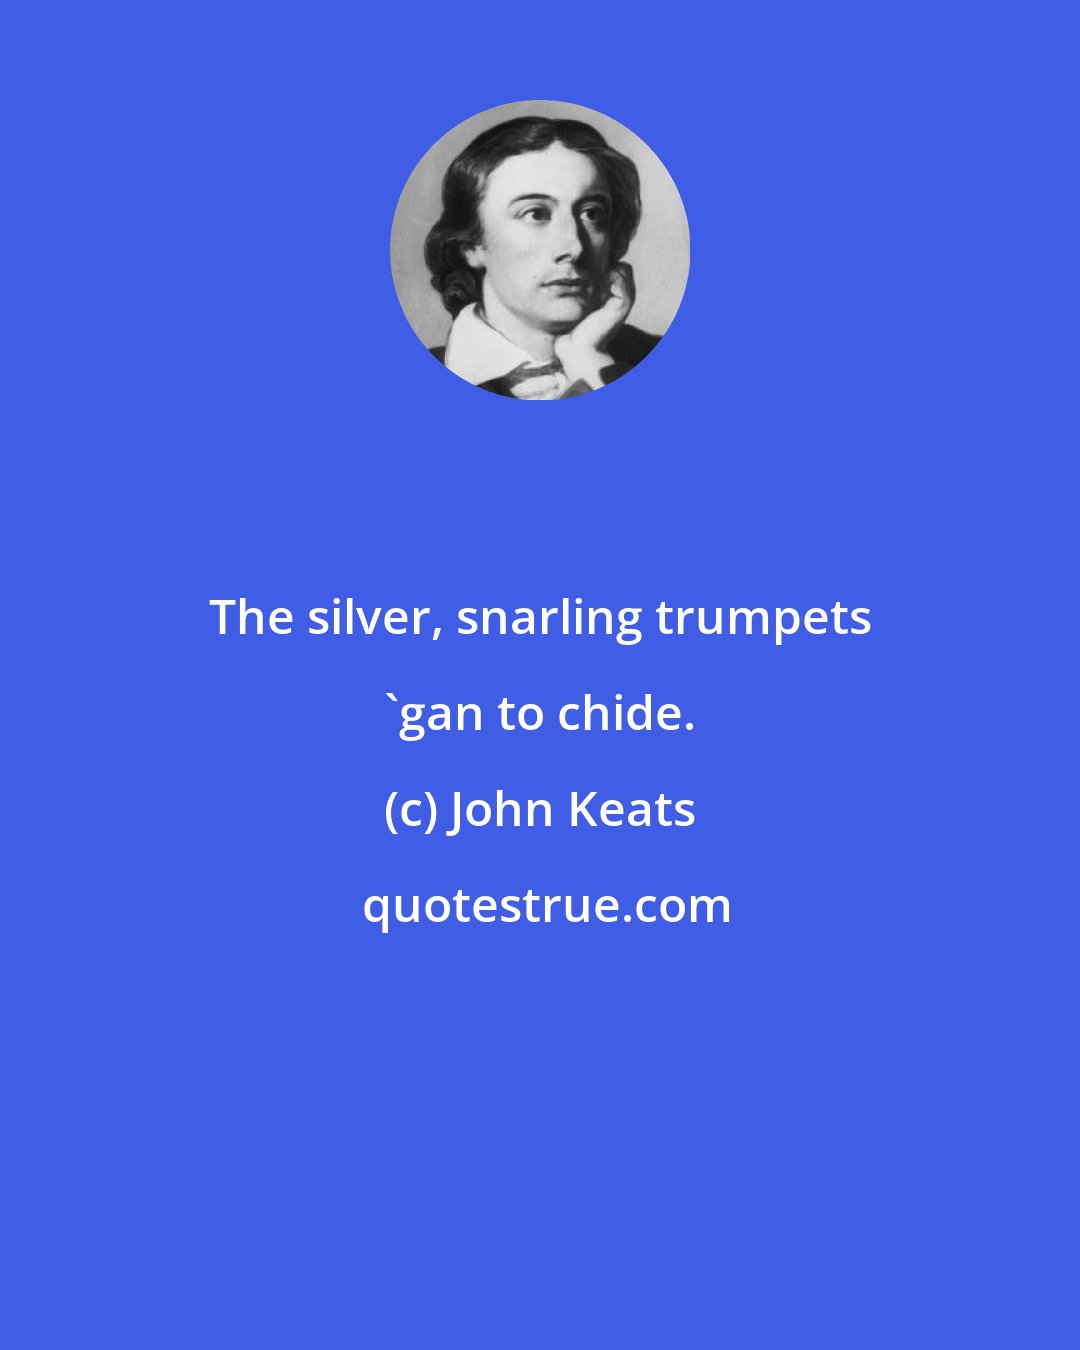 John Keats: The silver, snarling trumpets 'gan to chide.